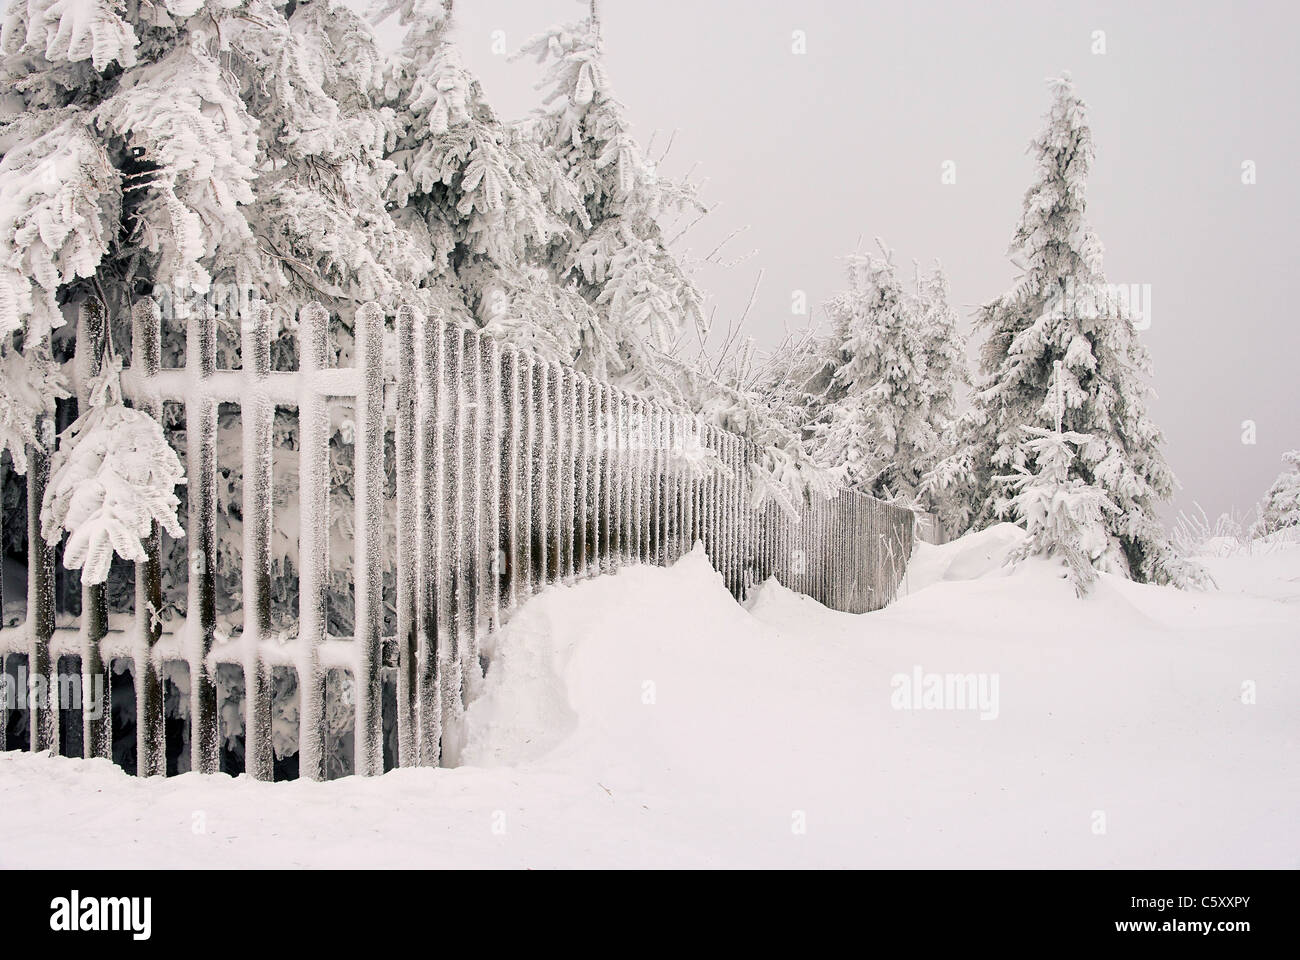 Zaun im Winter - fence in winter 03 Stock Photo